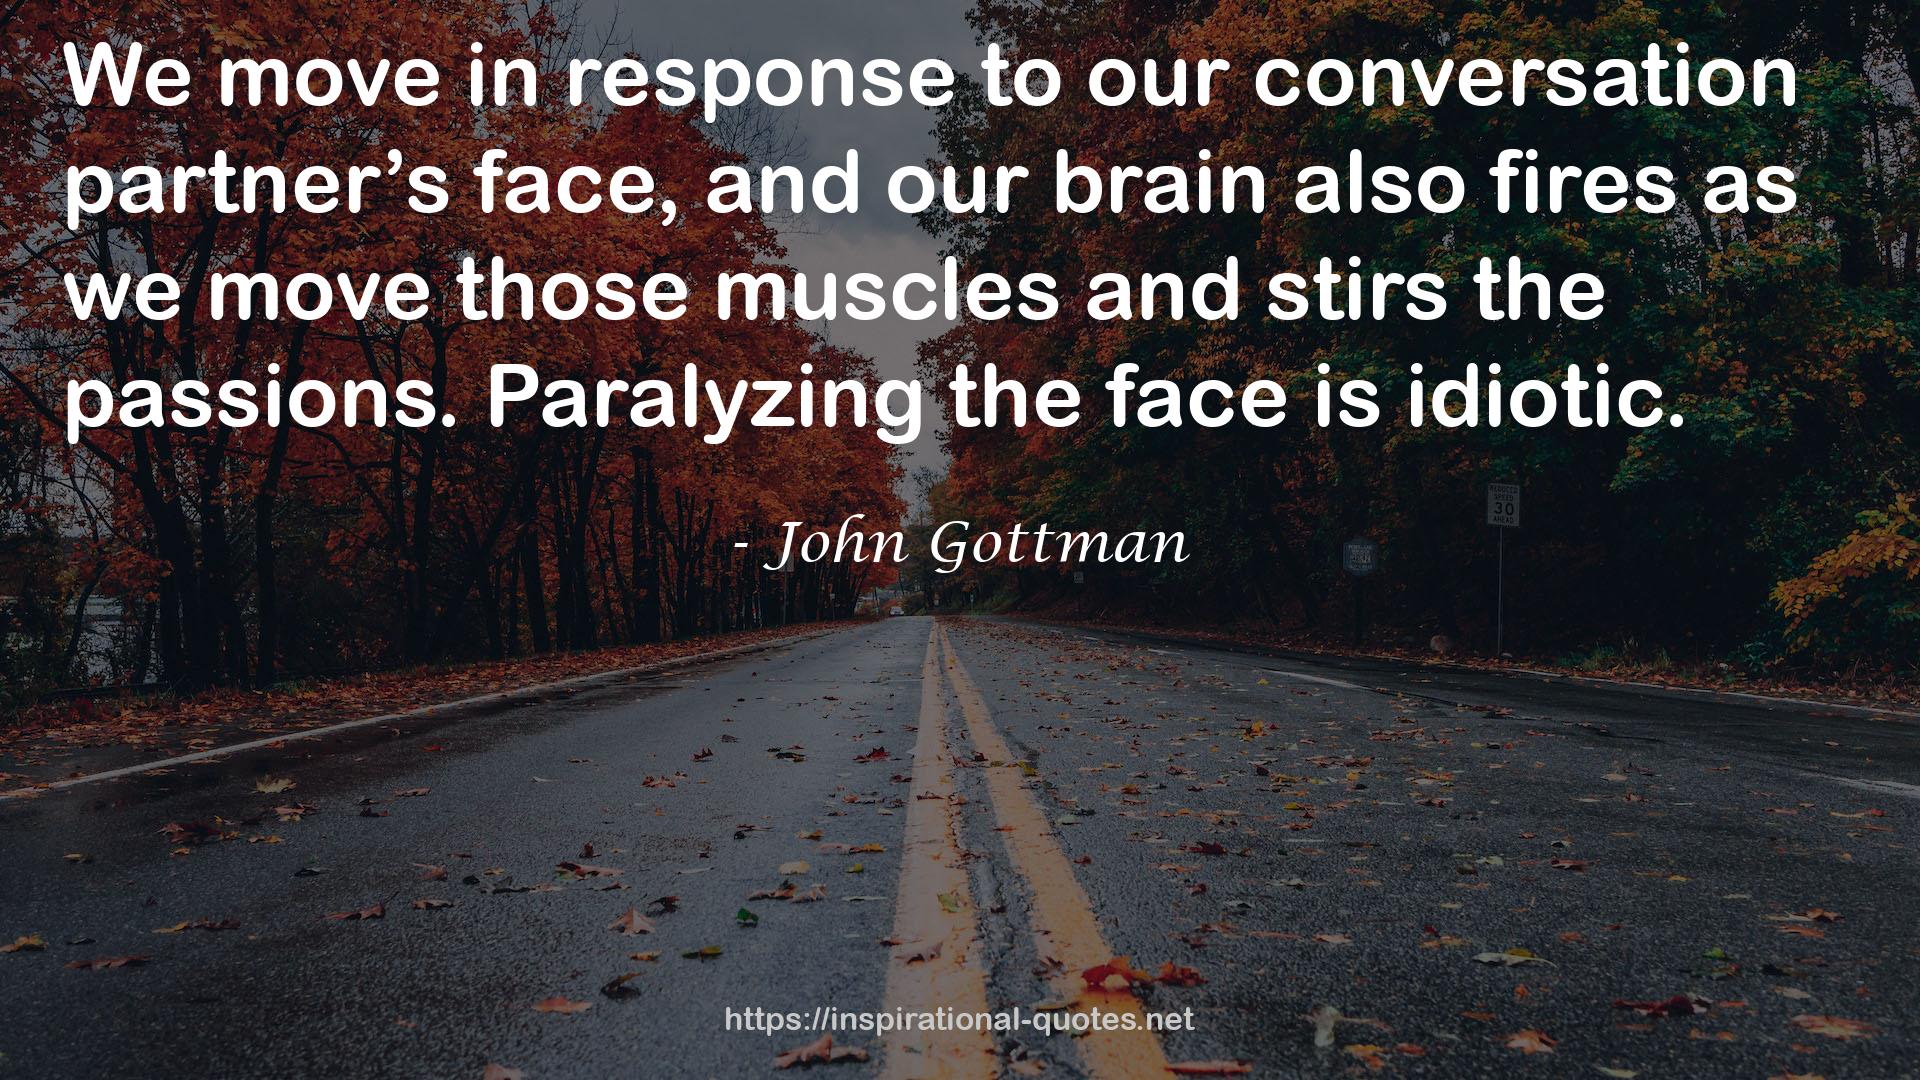 John Gottman QUOTES